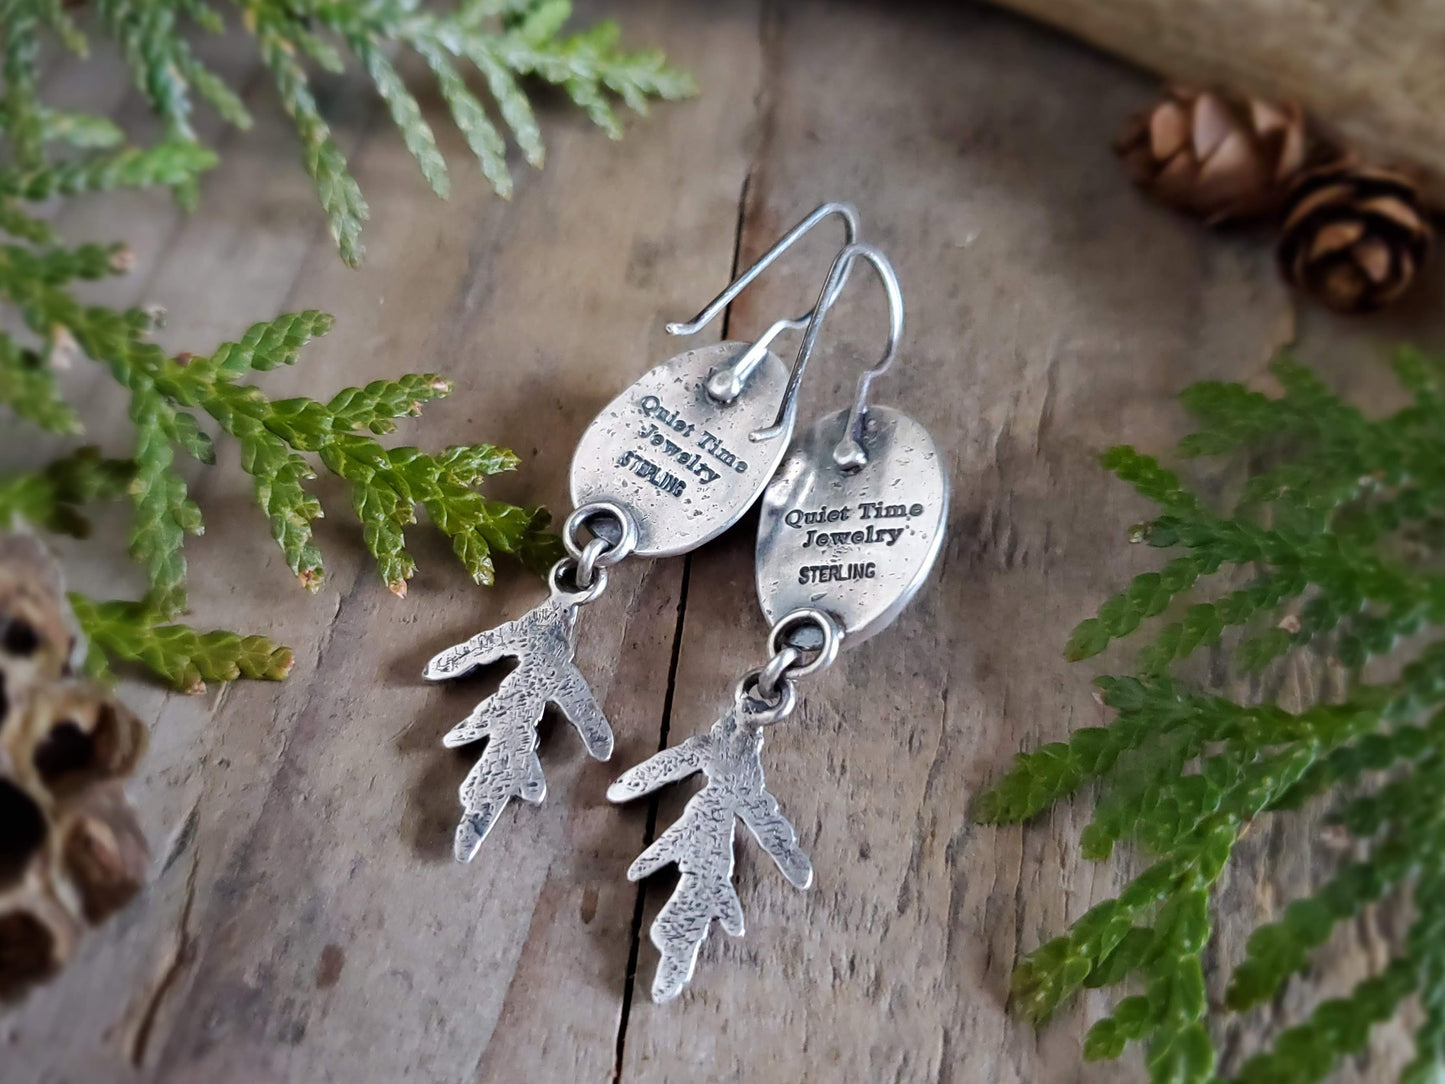 Dendritic Agate Earrings with Cedar Branch Dangles